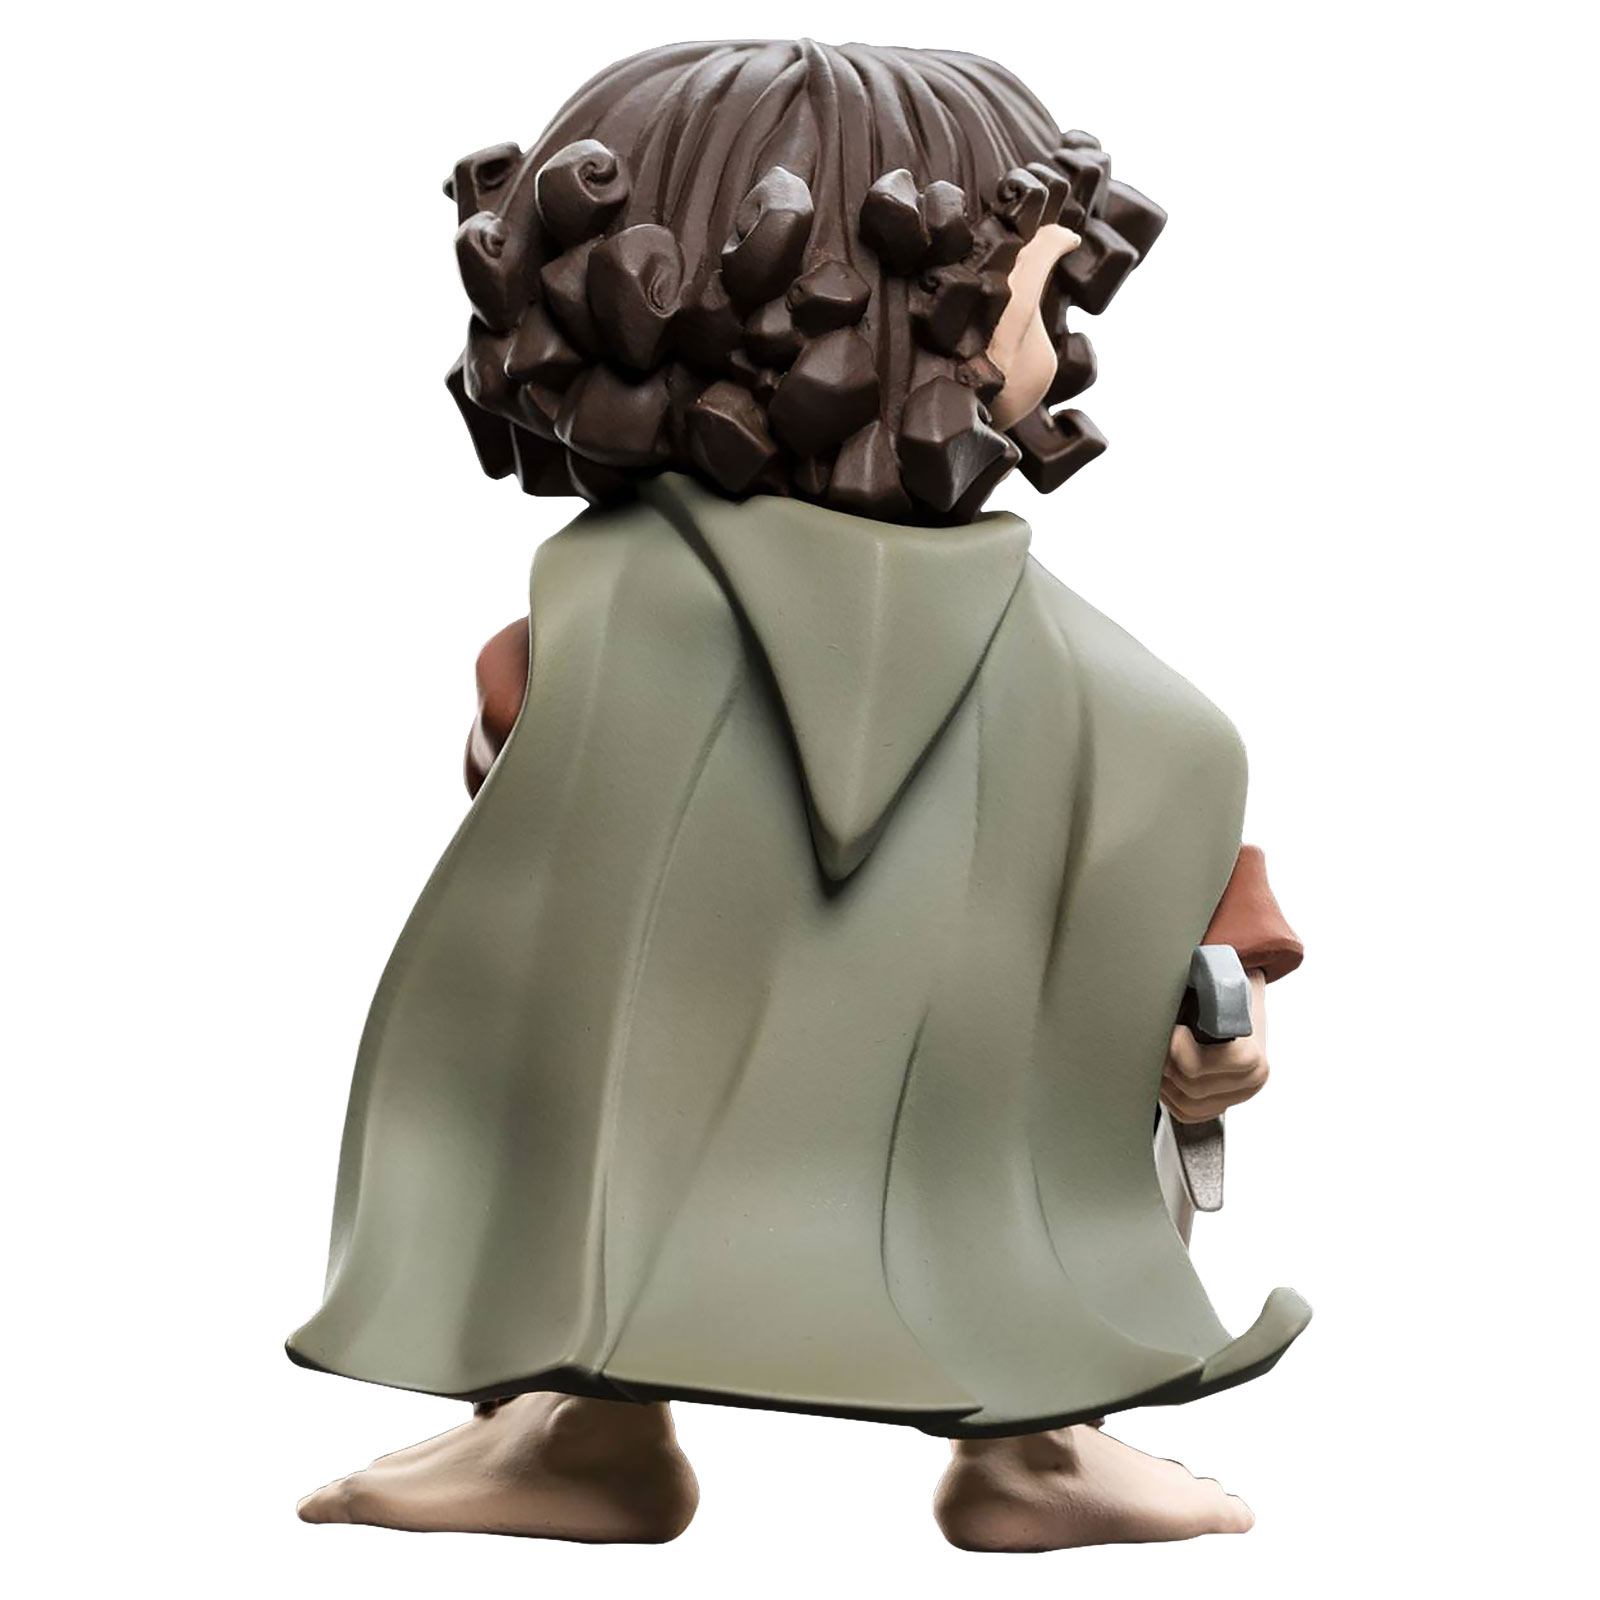 Herr der Ringe - Frodo Mini Epics Figur